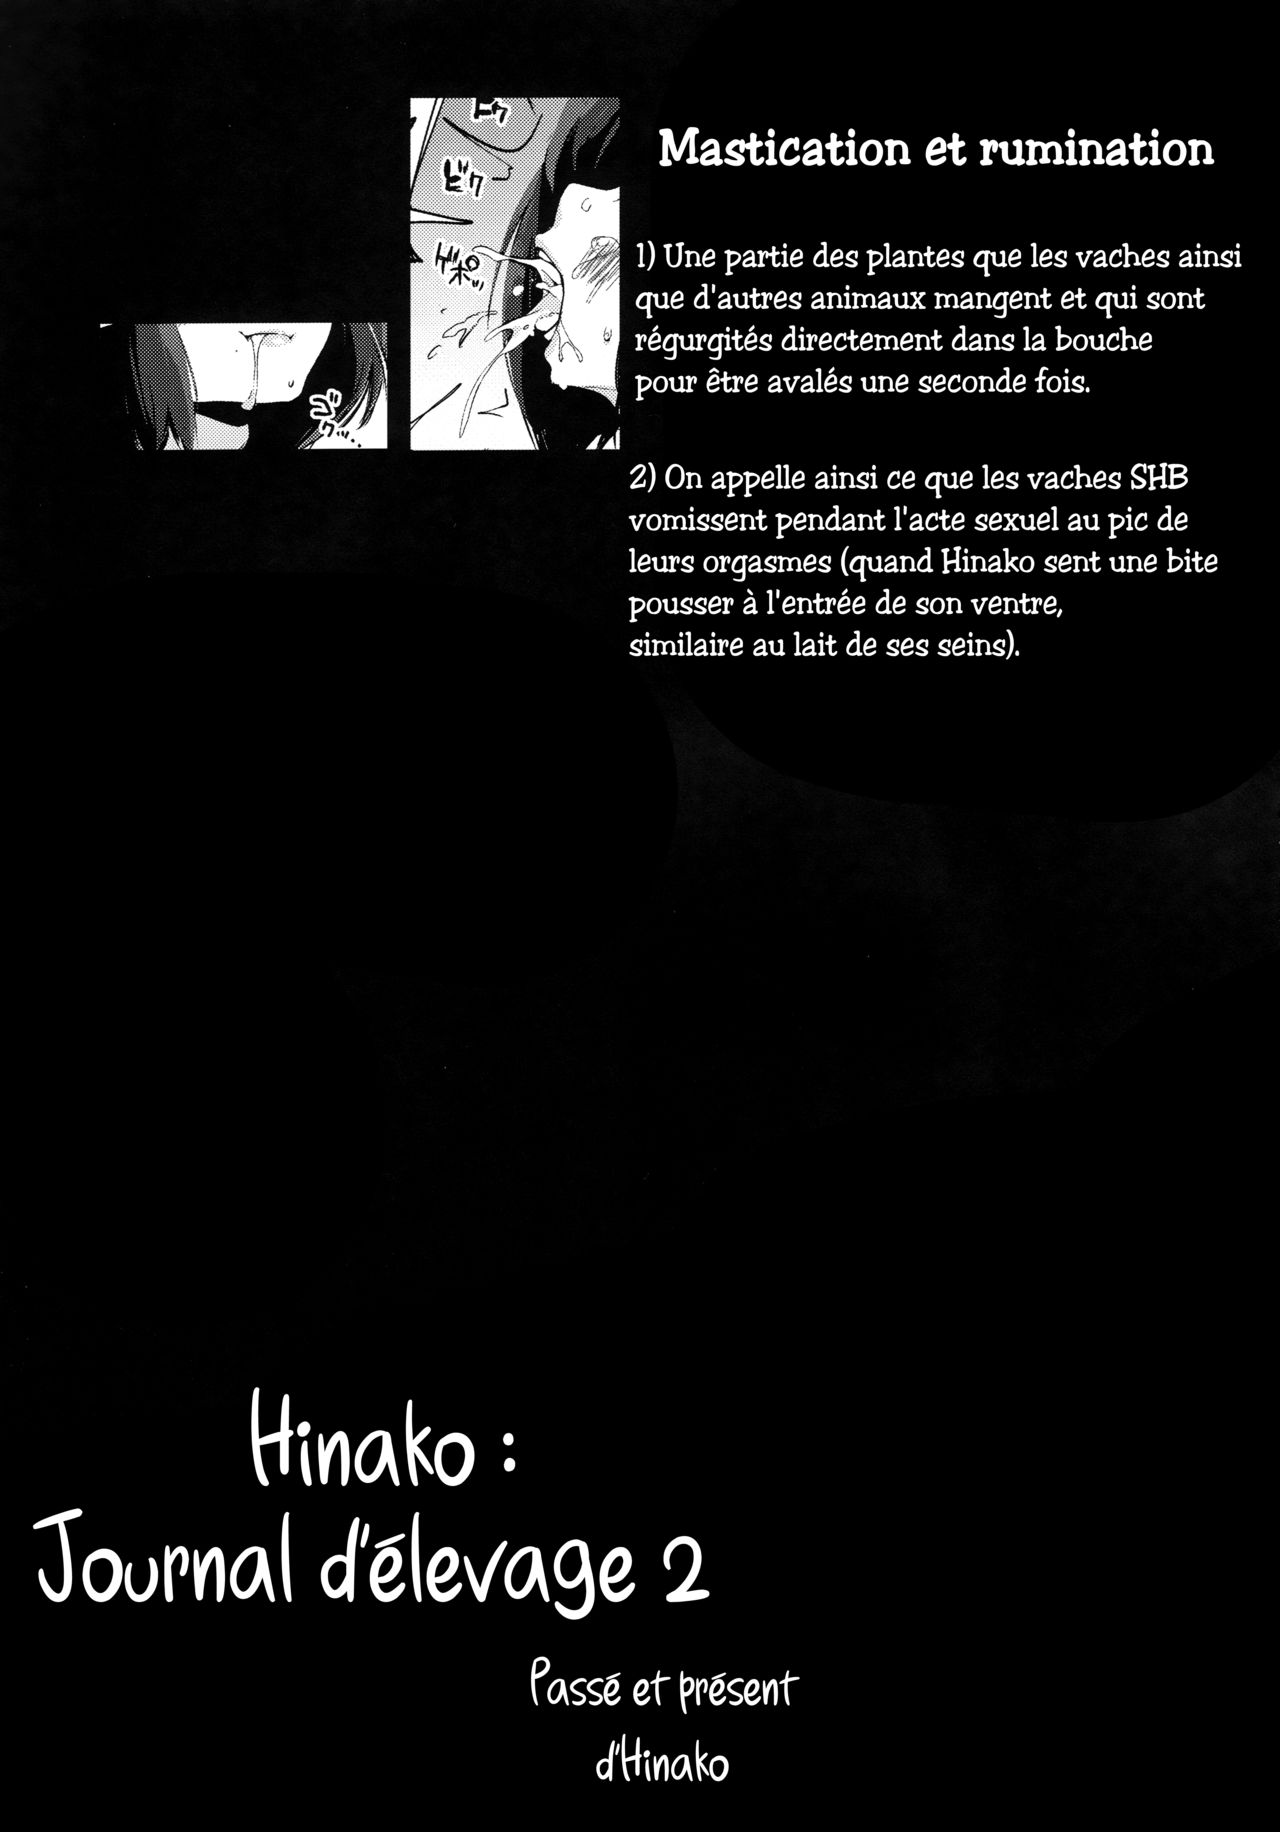 Hinako Ikusei Nisshi 2 ~Hinako no Kako to Genzai~  Journal délevage de Hinako 2- Passé et présent dHinako numero d'image 30